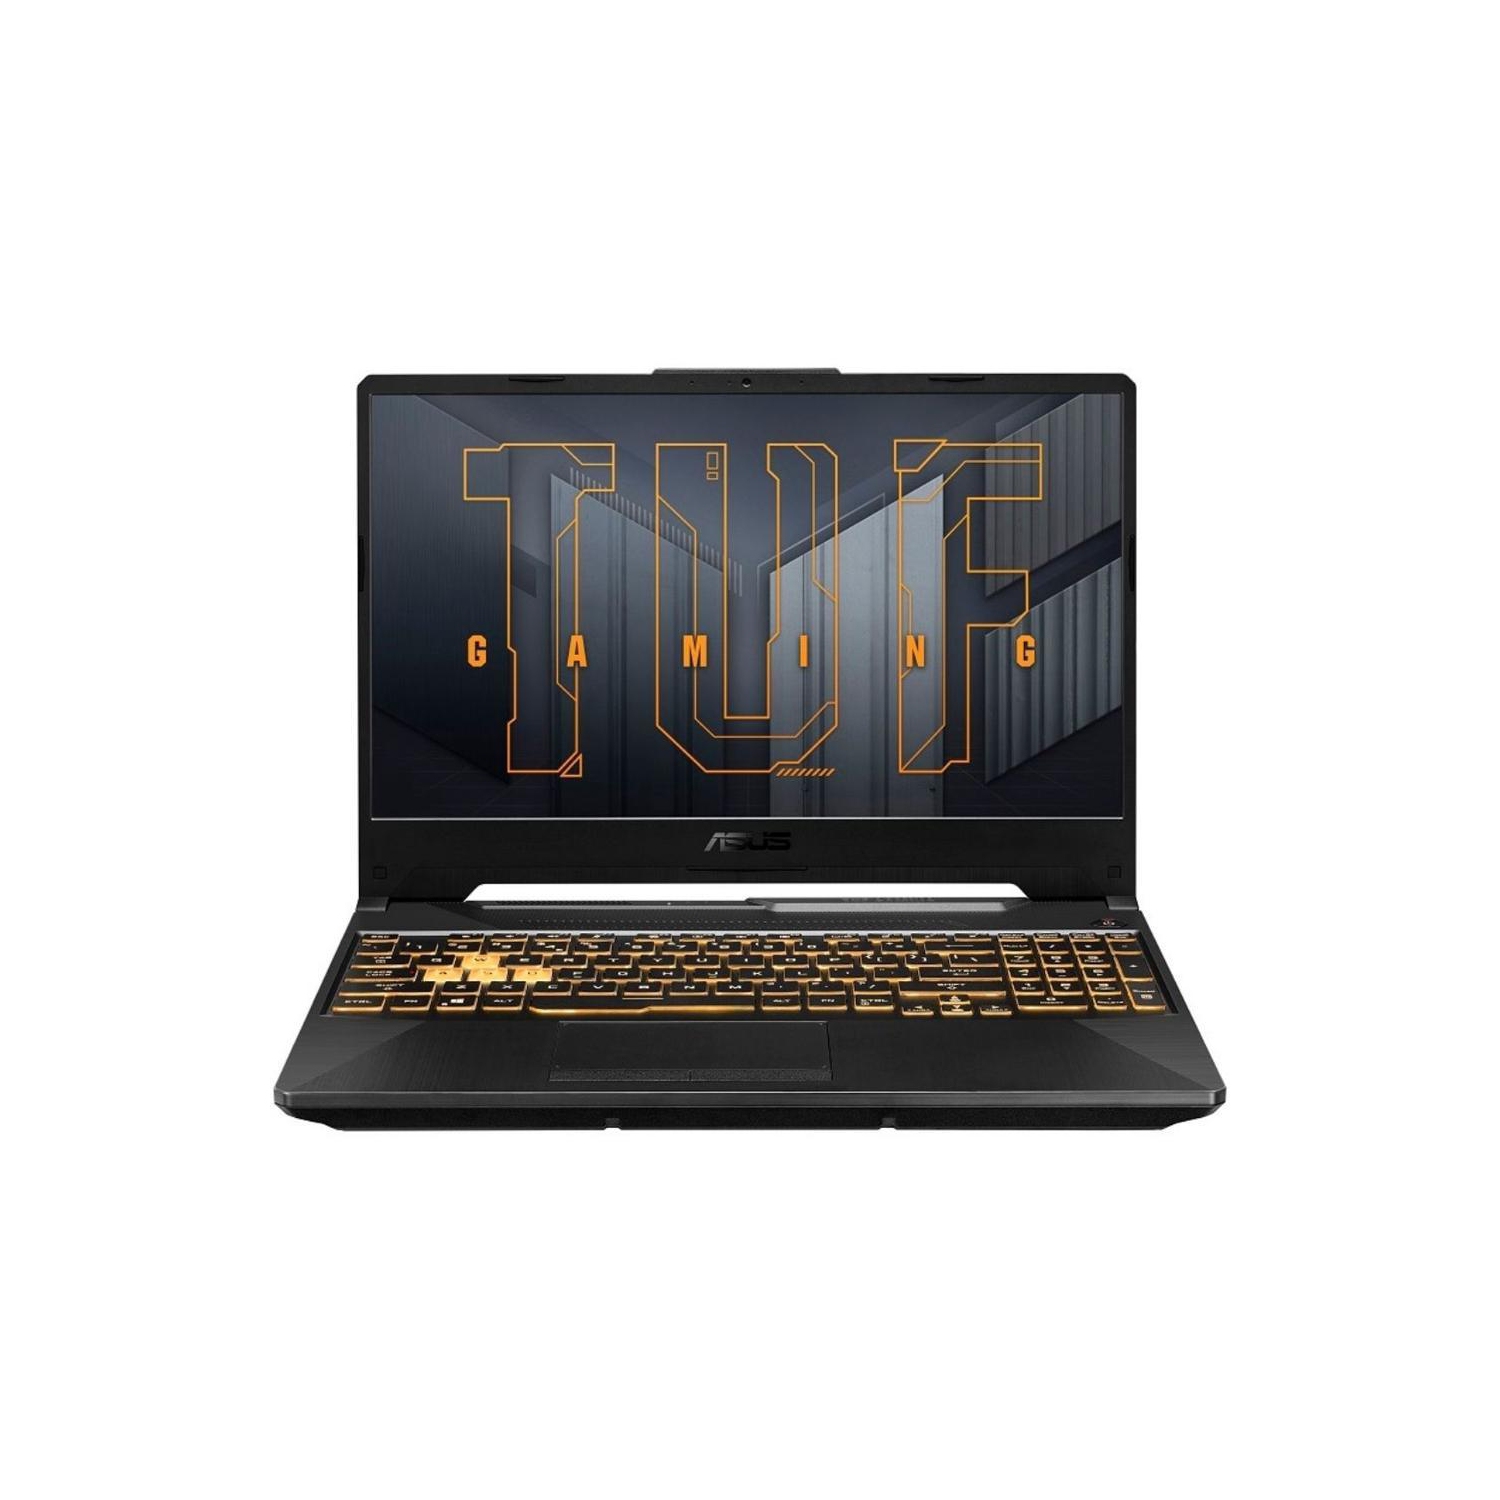 Custom ASUS TUF Gaming F15 Laptop (Intel i7-11800H, 64GB RAM, 1TB PCIe SSD, NVIDIA RTX 3060 Max-P, Win 10 Pro)